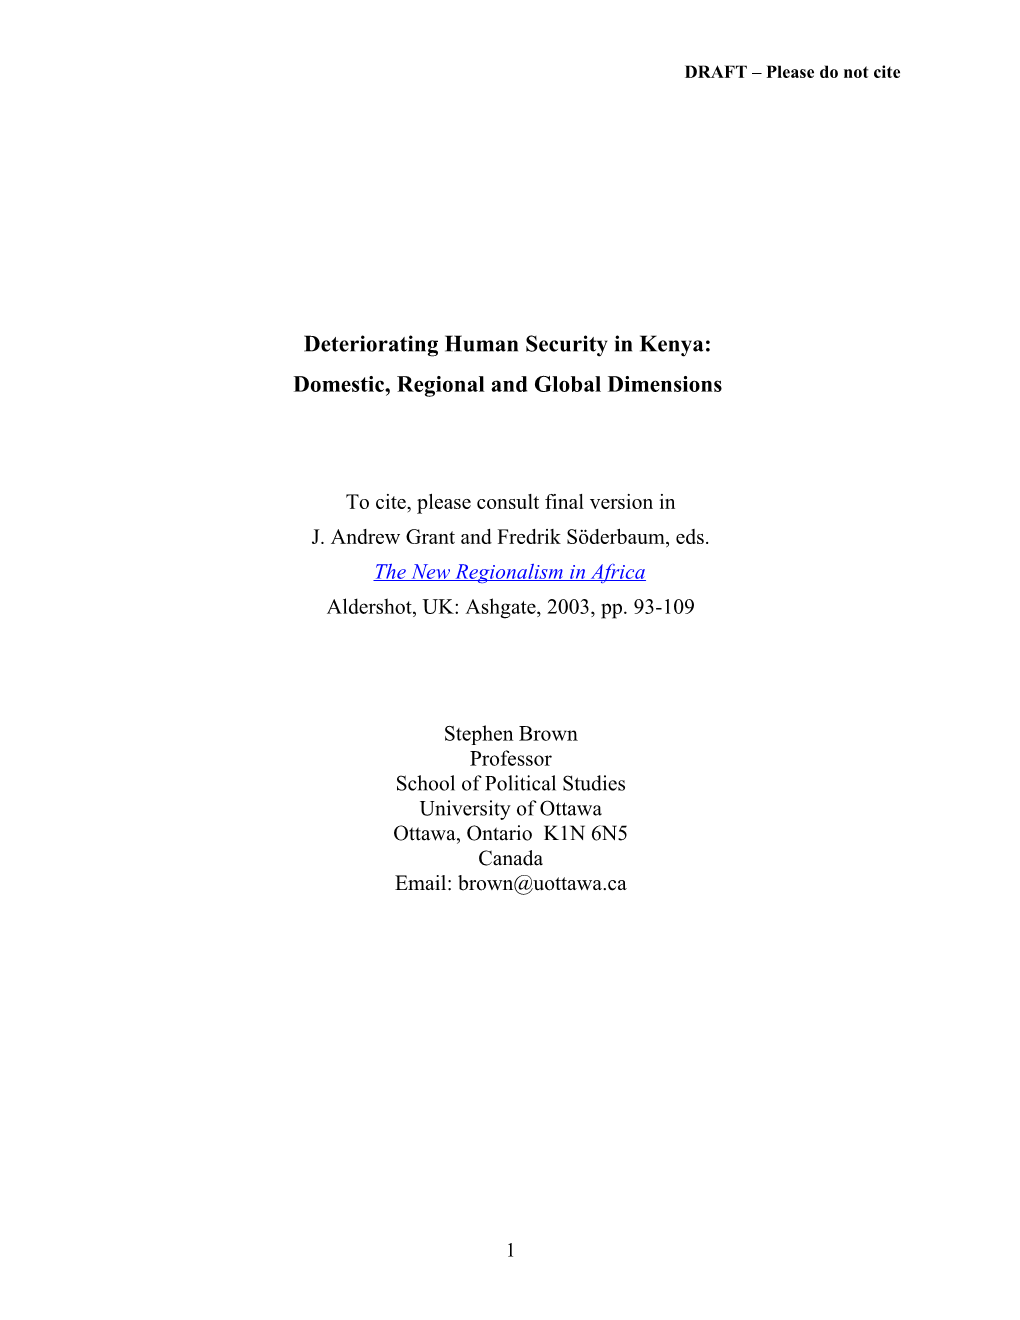 Democratization and Human Security in Kenya: Regional and Global Dimensions